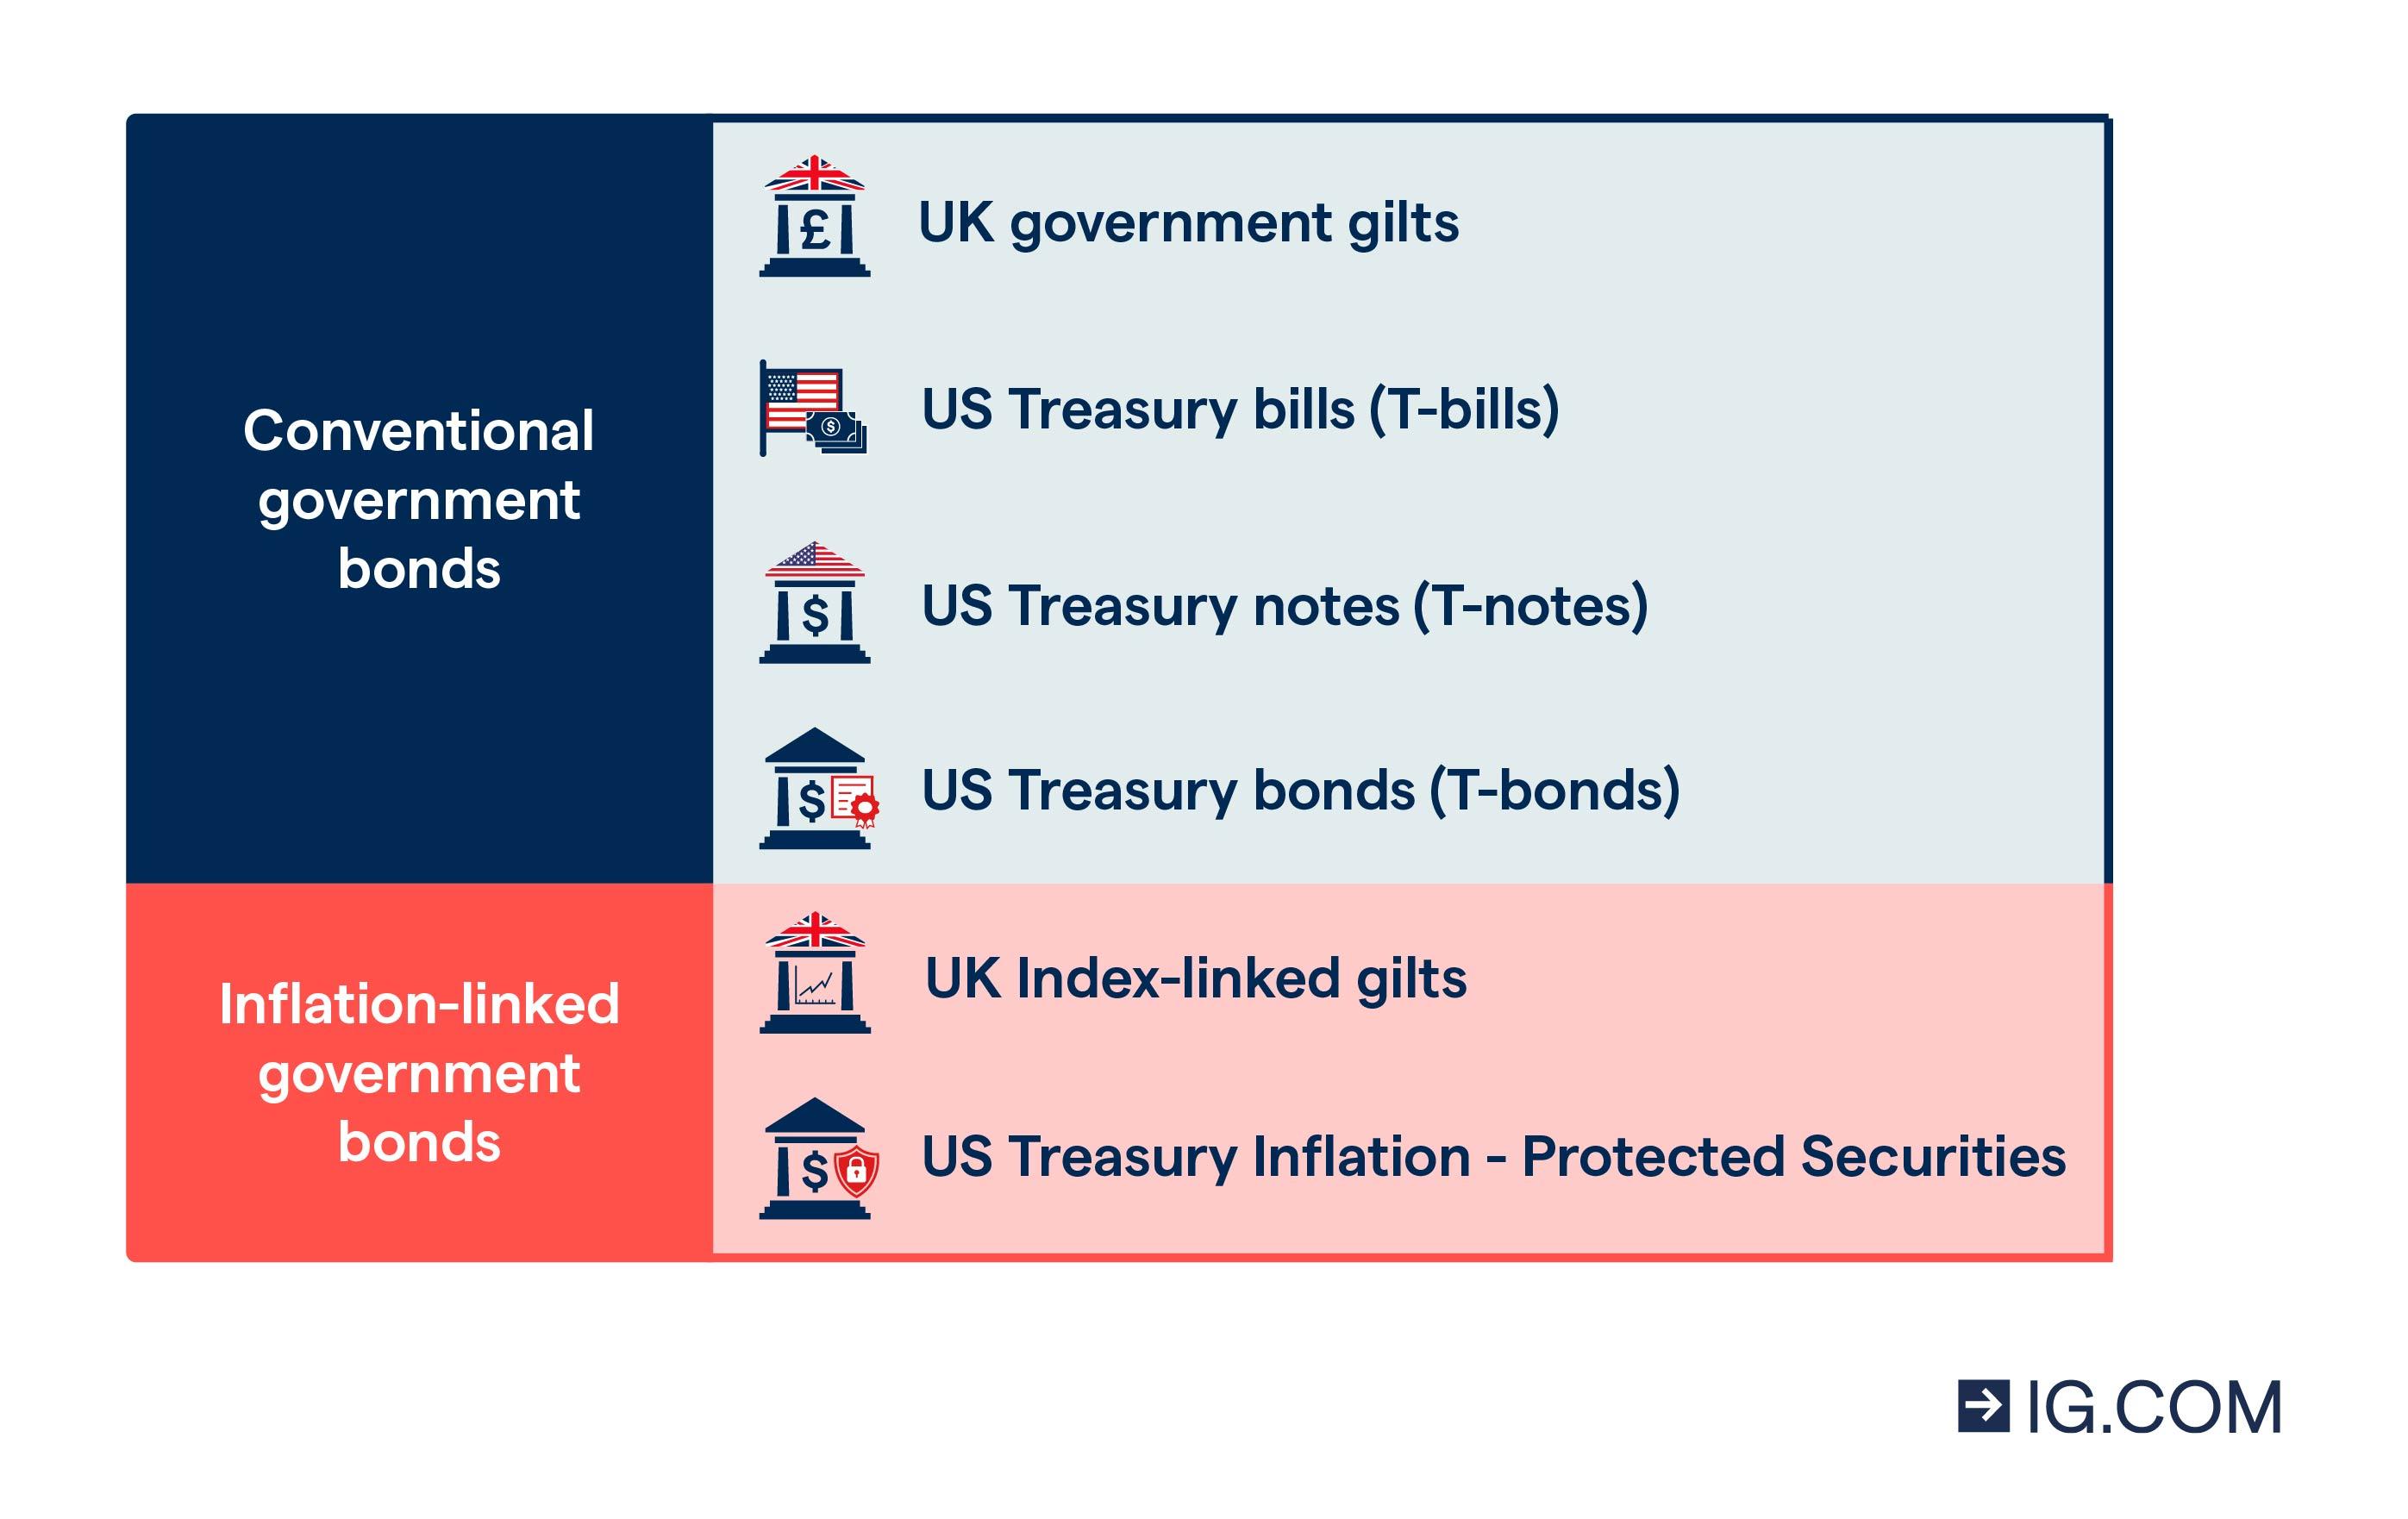 Conventional government bonds vs. inflation linked government bonds.